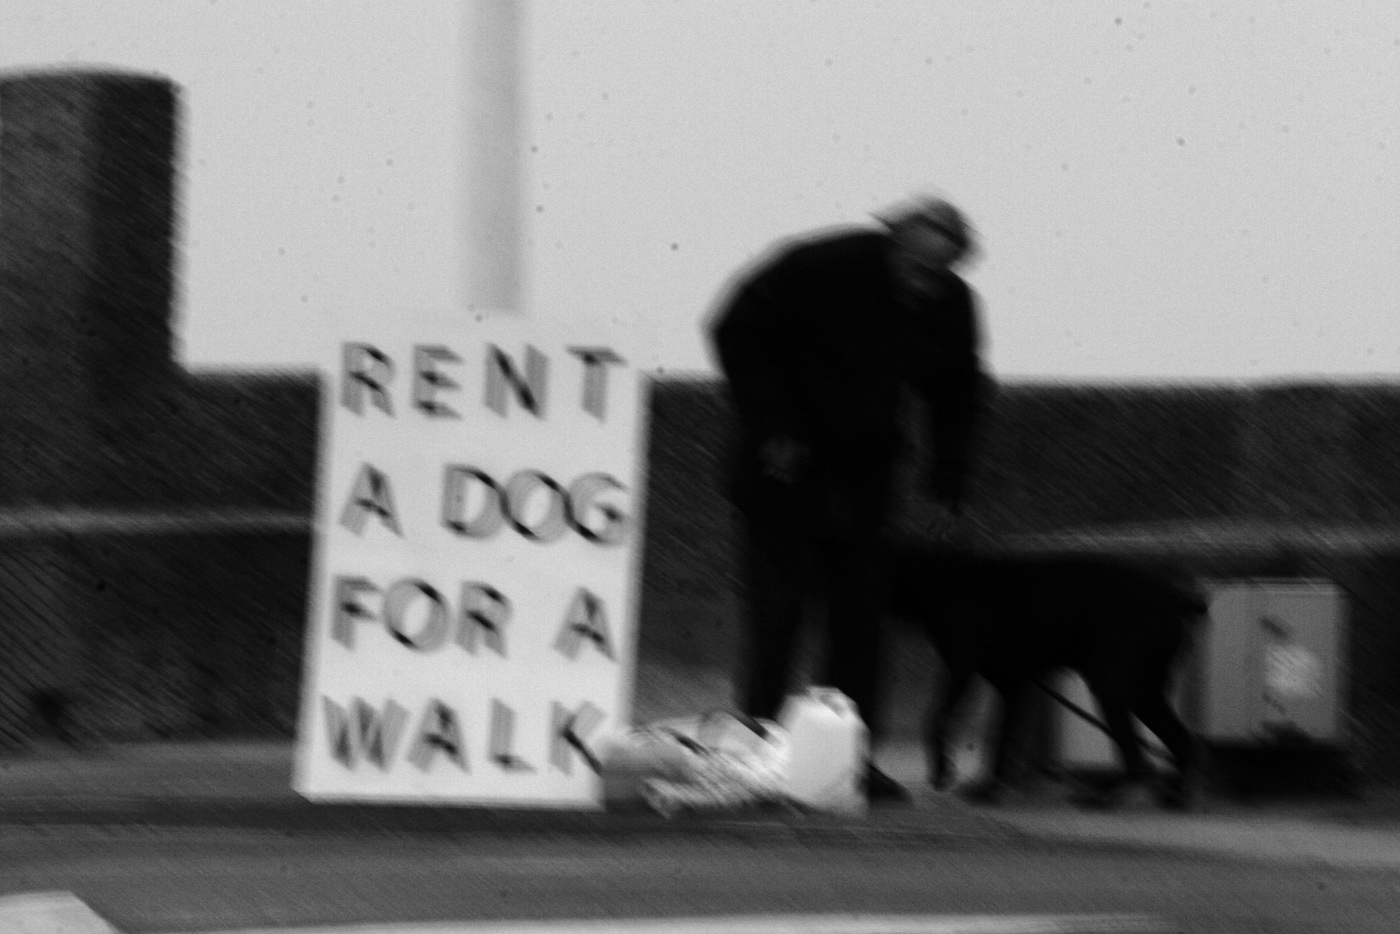 Rent a dog (3), Elisa Pne